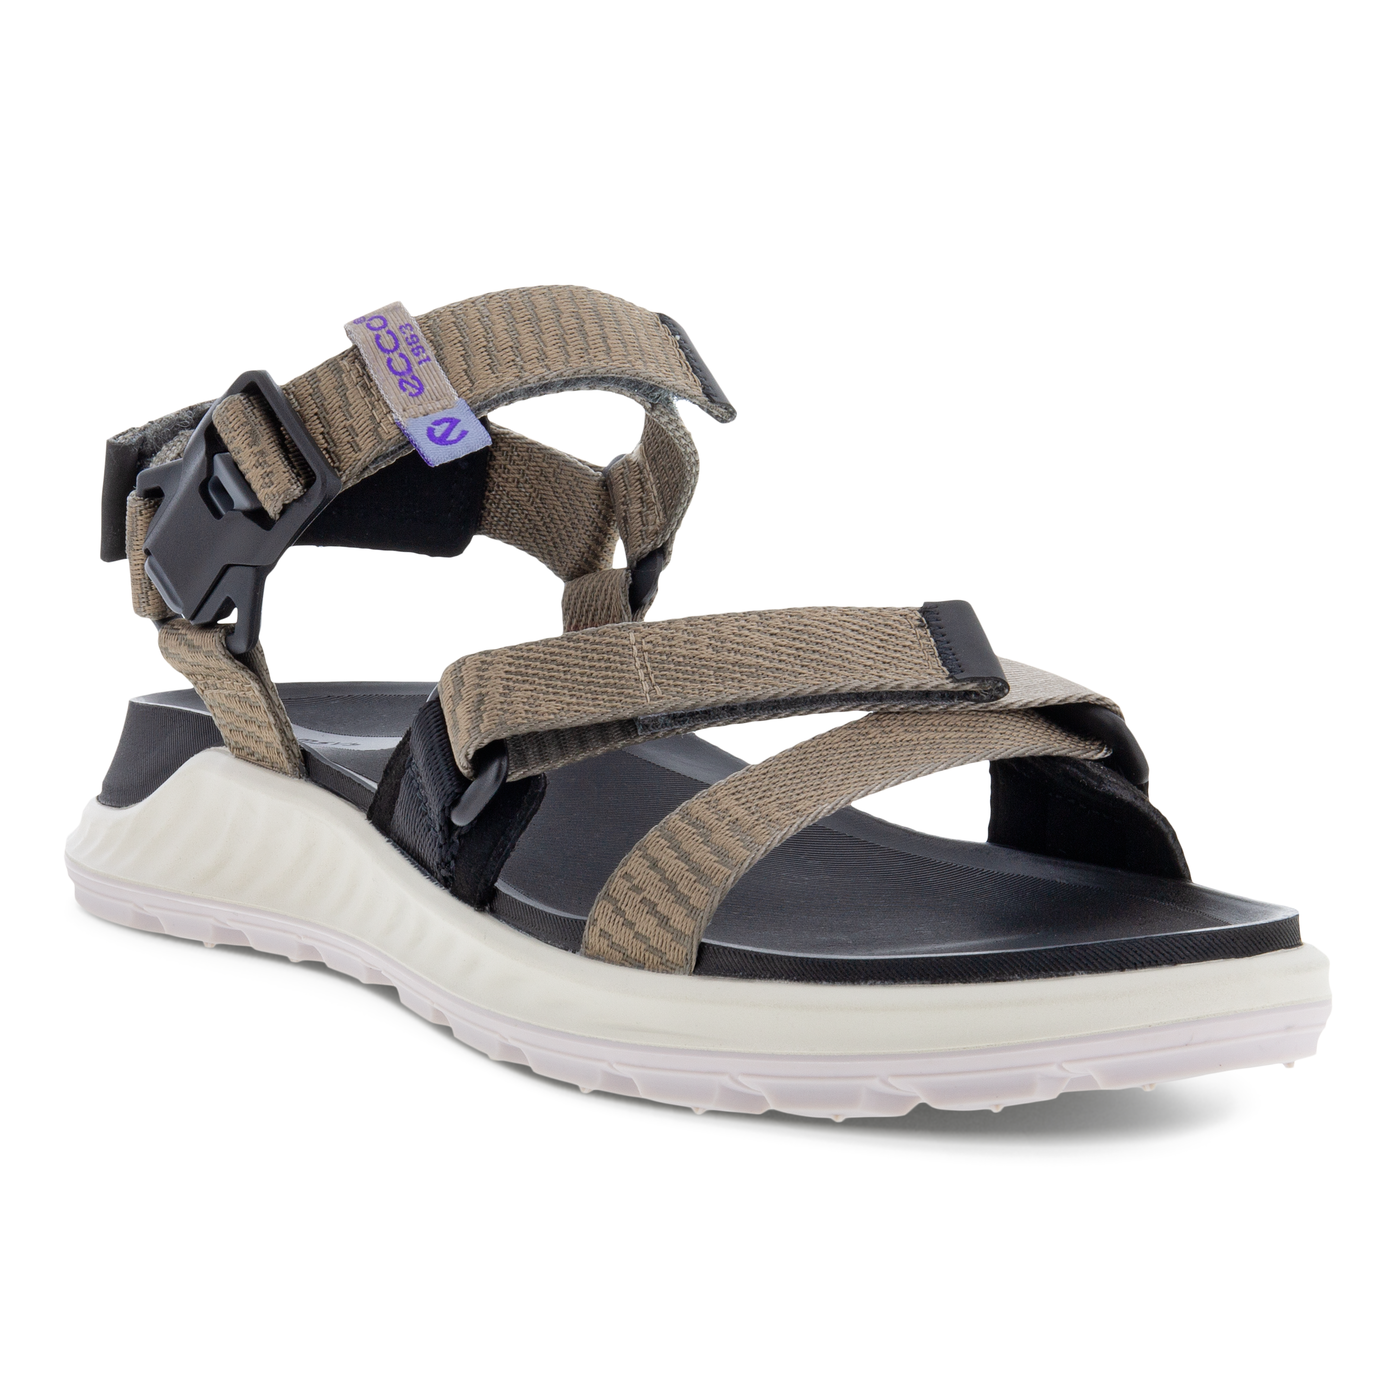 Exowrap W - shoe&amp;me - Ecco - Sandal - Sandals, Summer, Womens